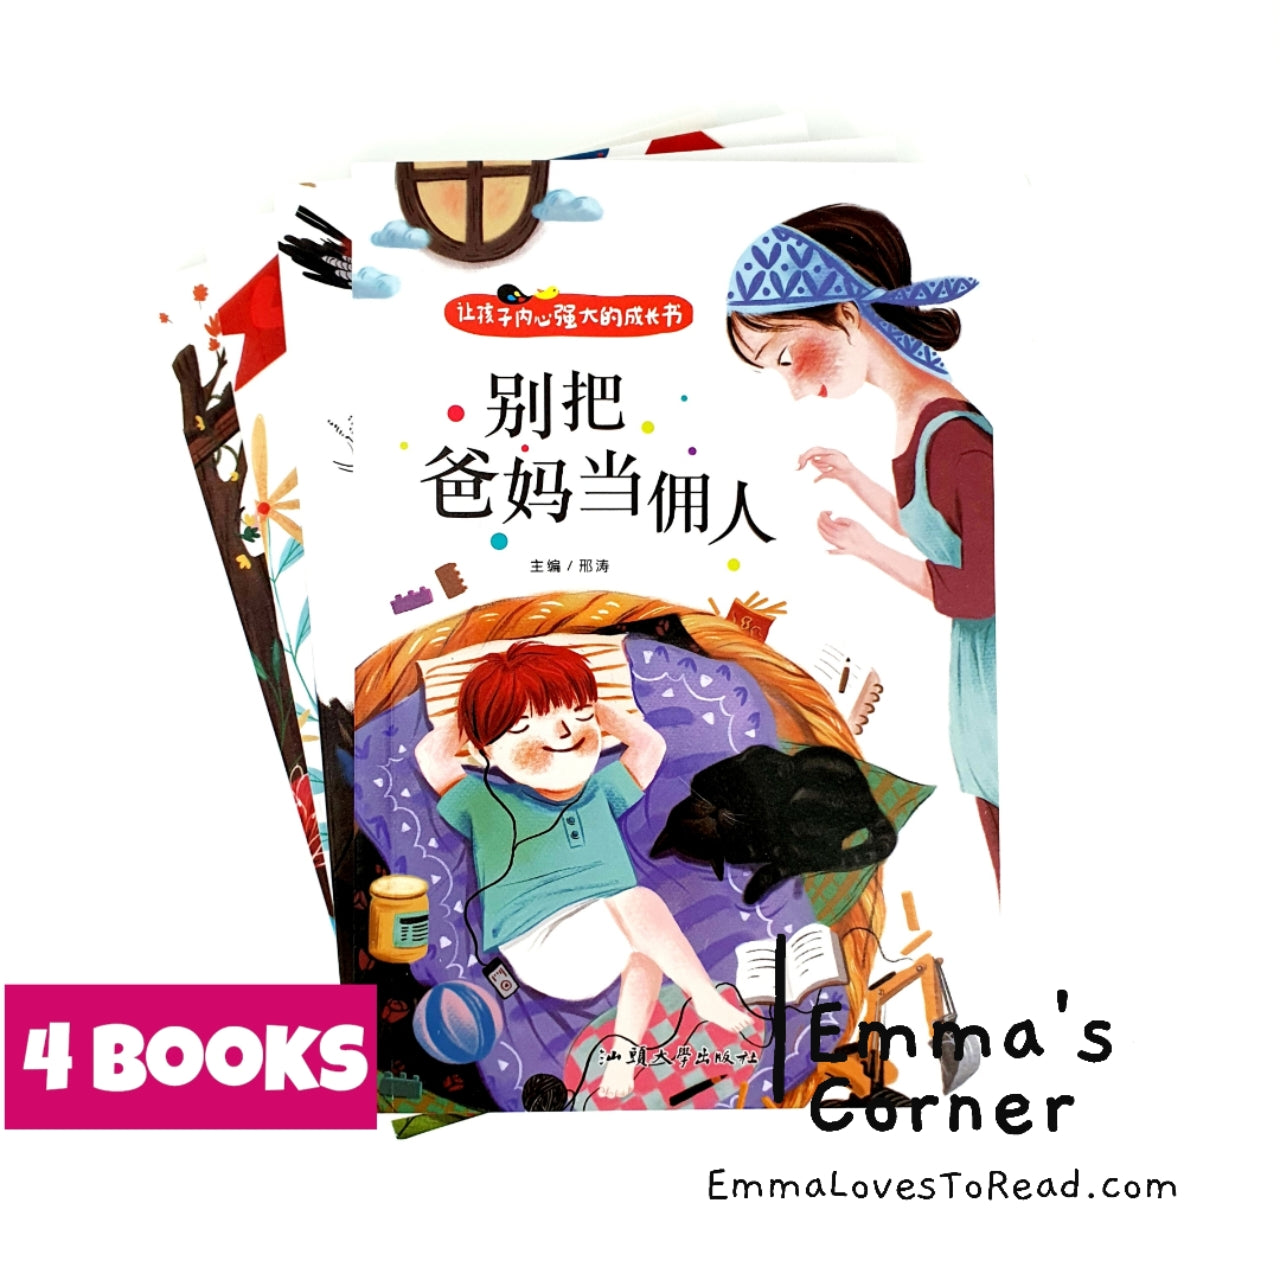 让孩子内心强大的成长书系列: 爸妈不是我的佣人 The Empowering Growth Book Series for Children with  Hanyu Pinyin (4 books) CHI